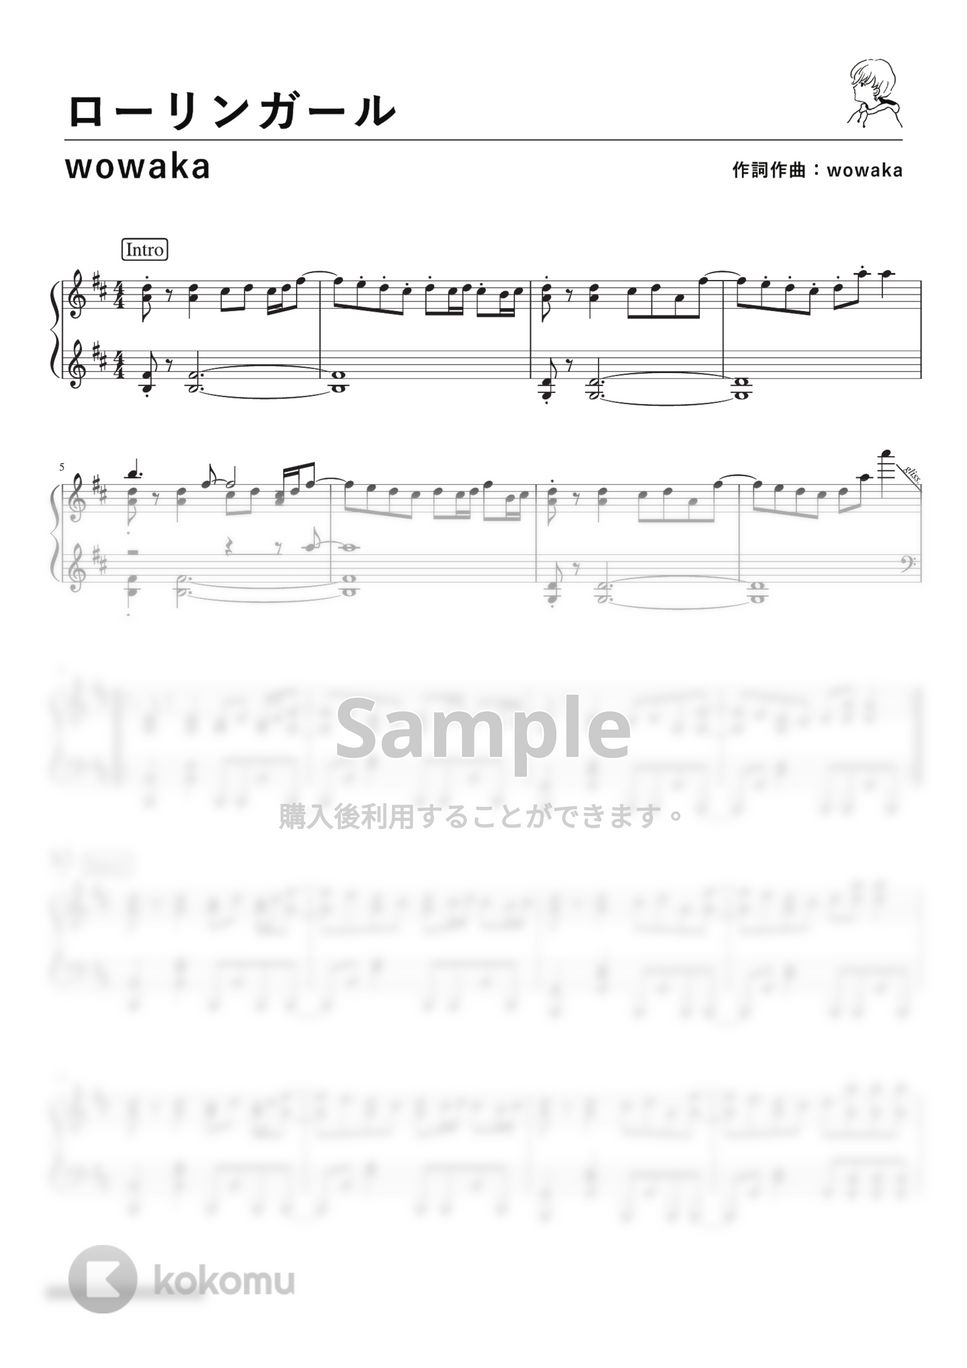 wowaka - ローリンガール (PianoSolo) by 深根 / Fukane